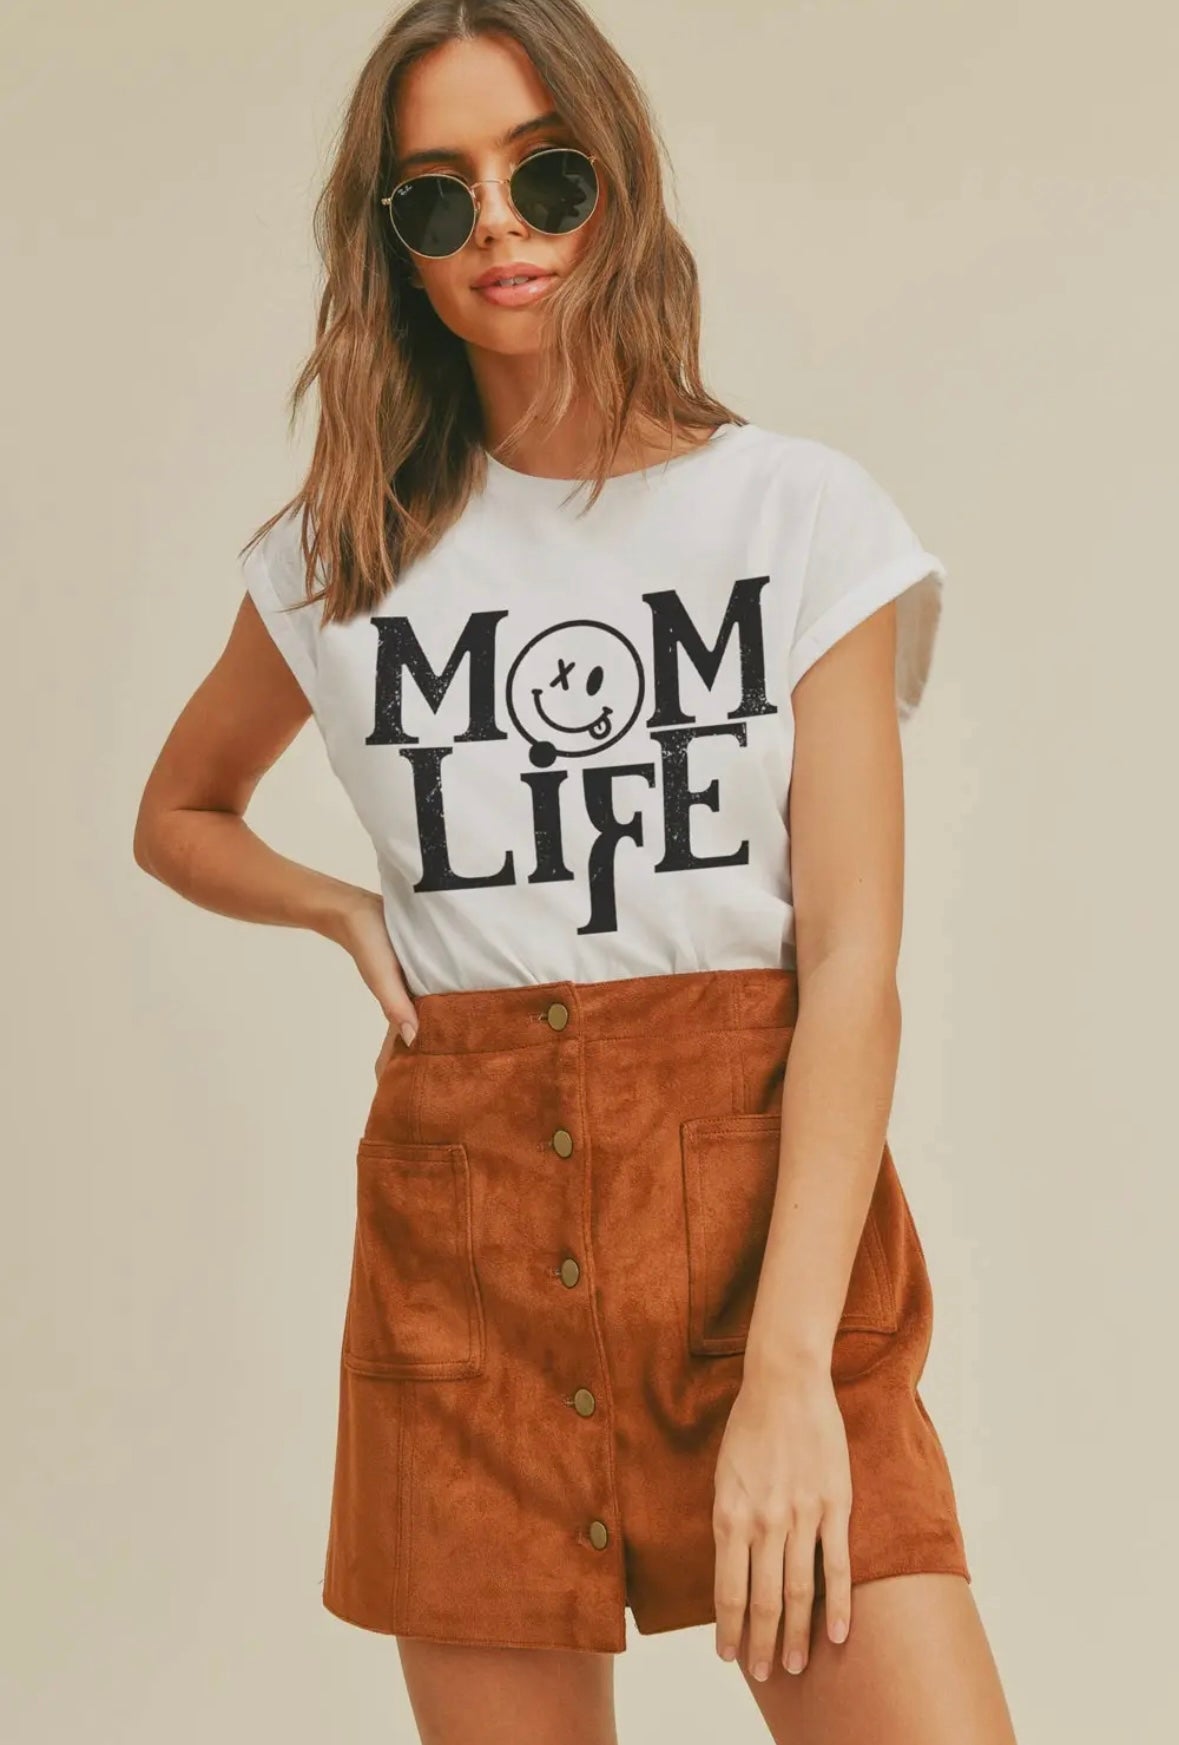 Mom Life Tee